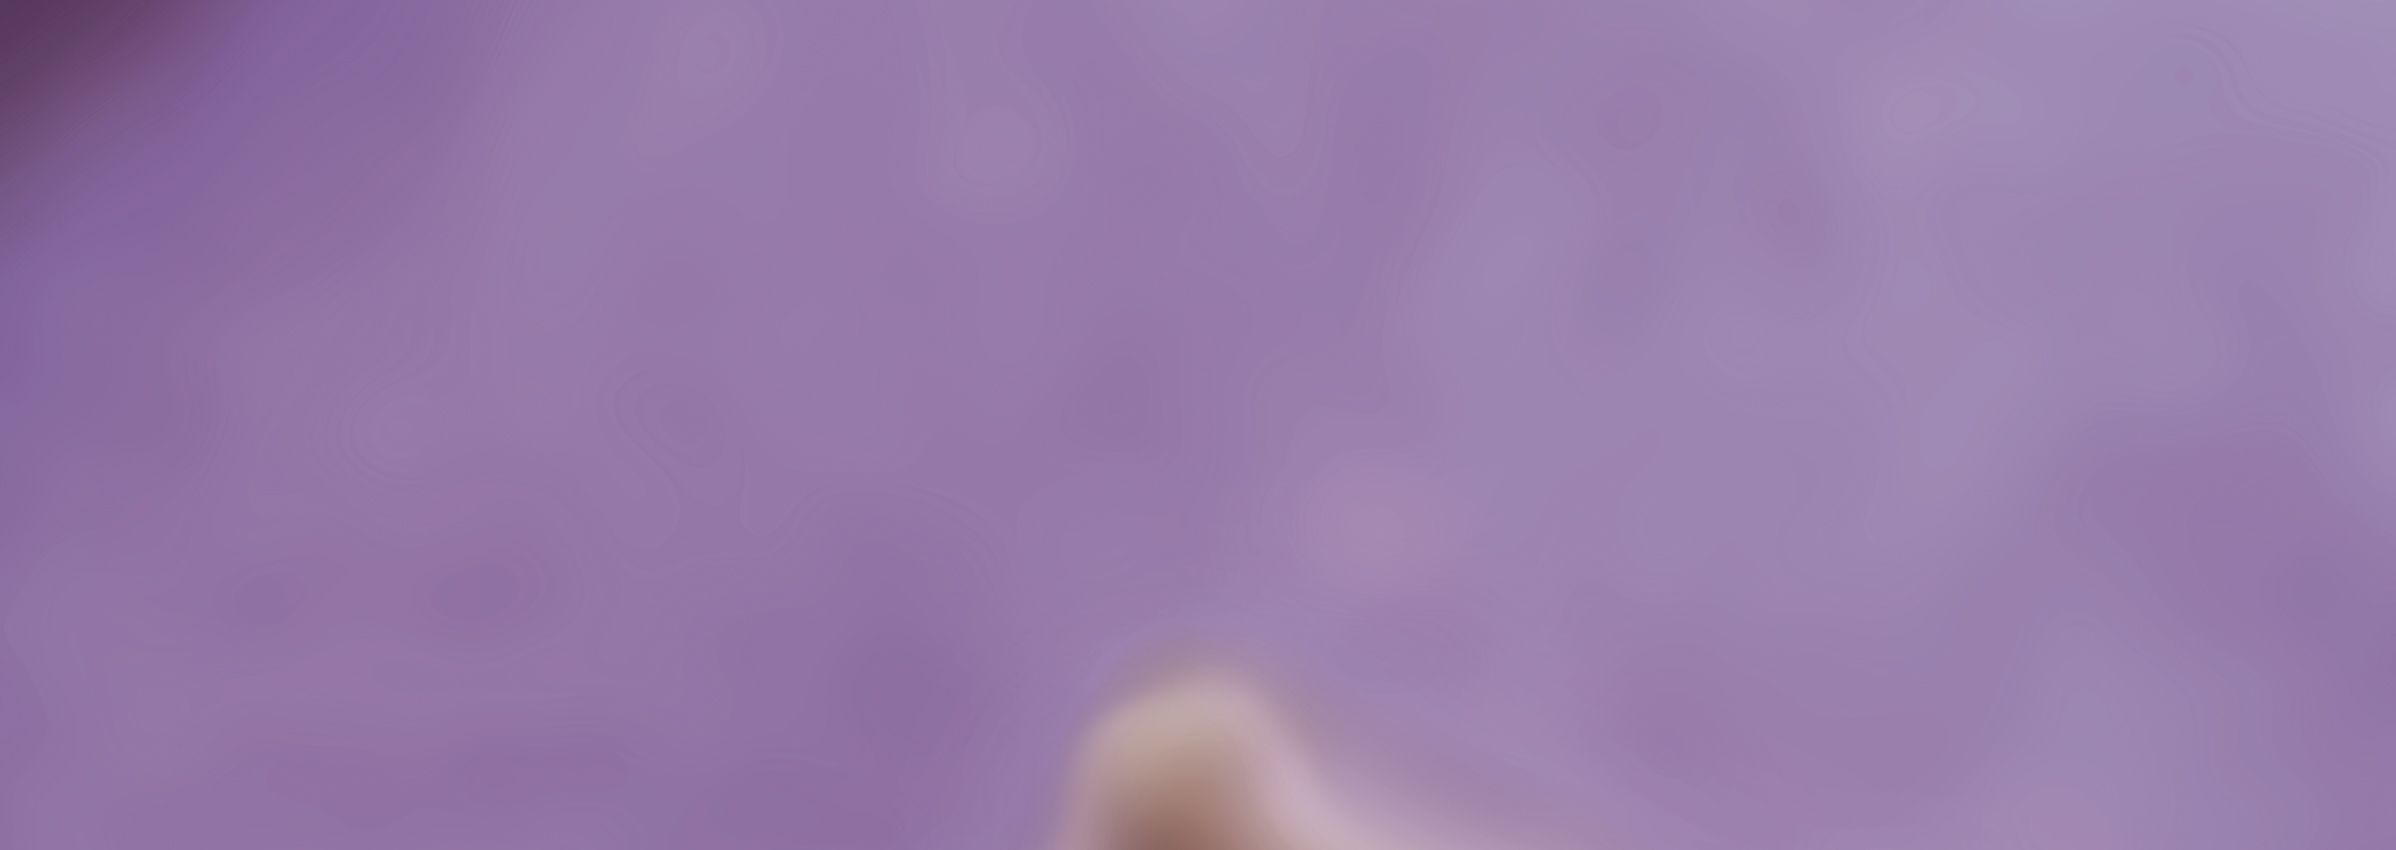 Image of blurred purple background